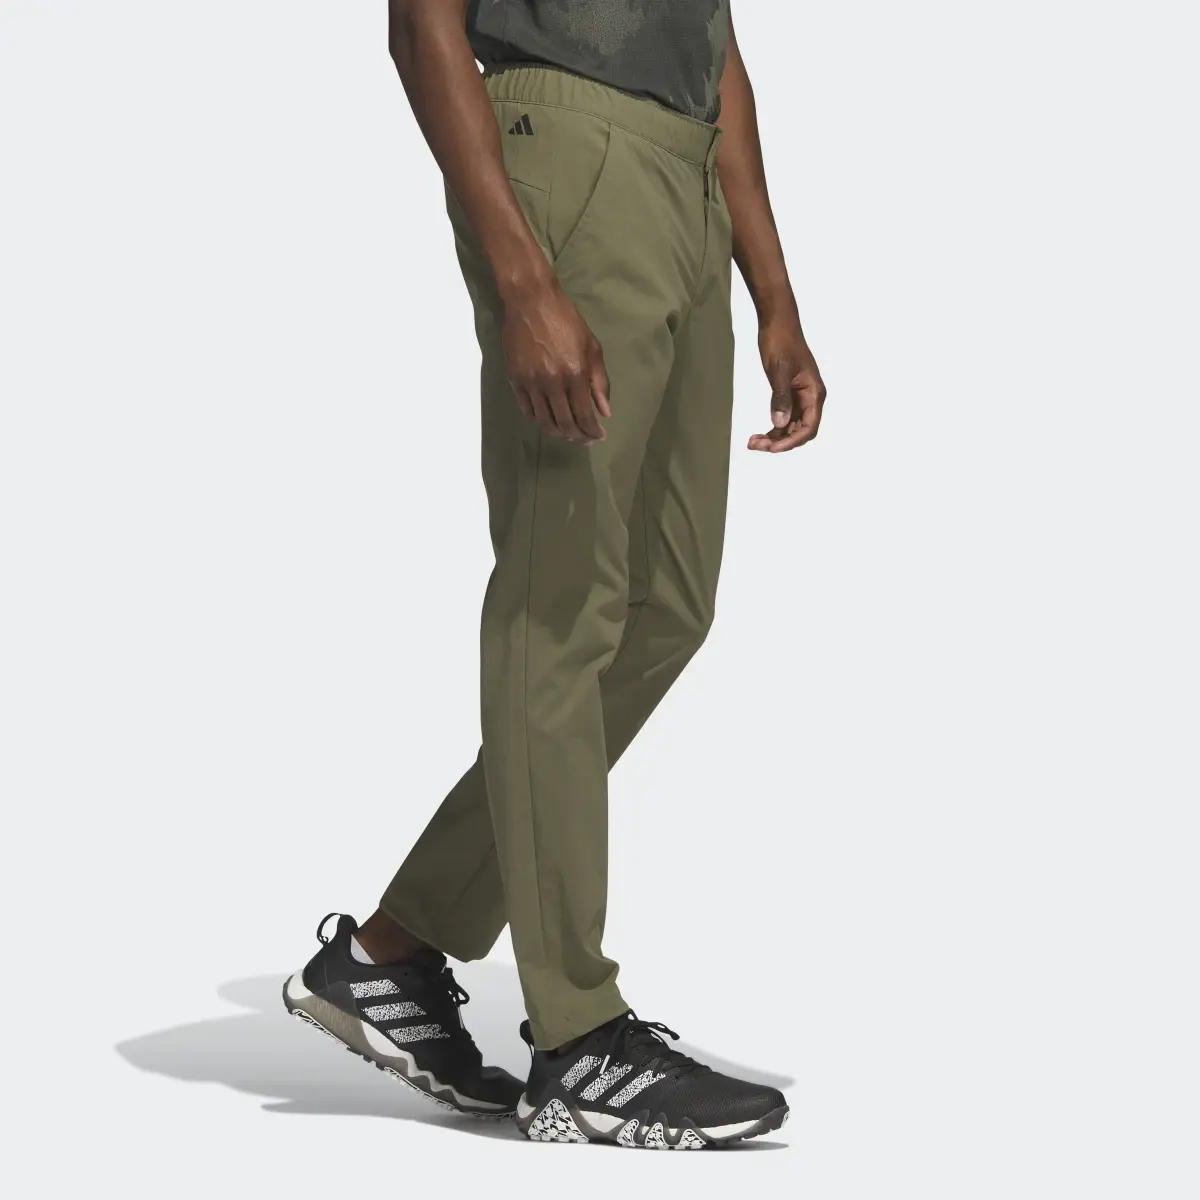 Adidas Golf Pants. 3